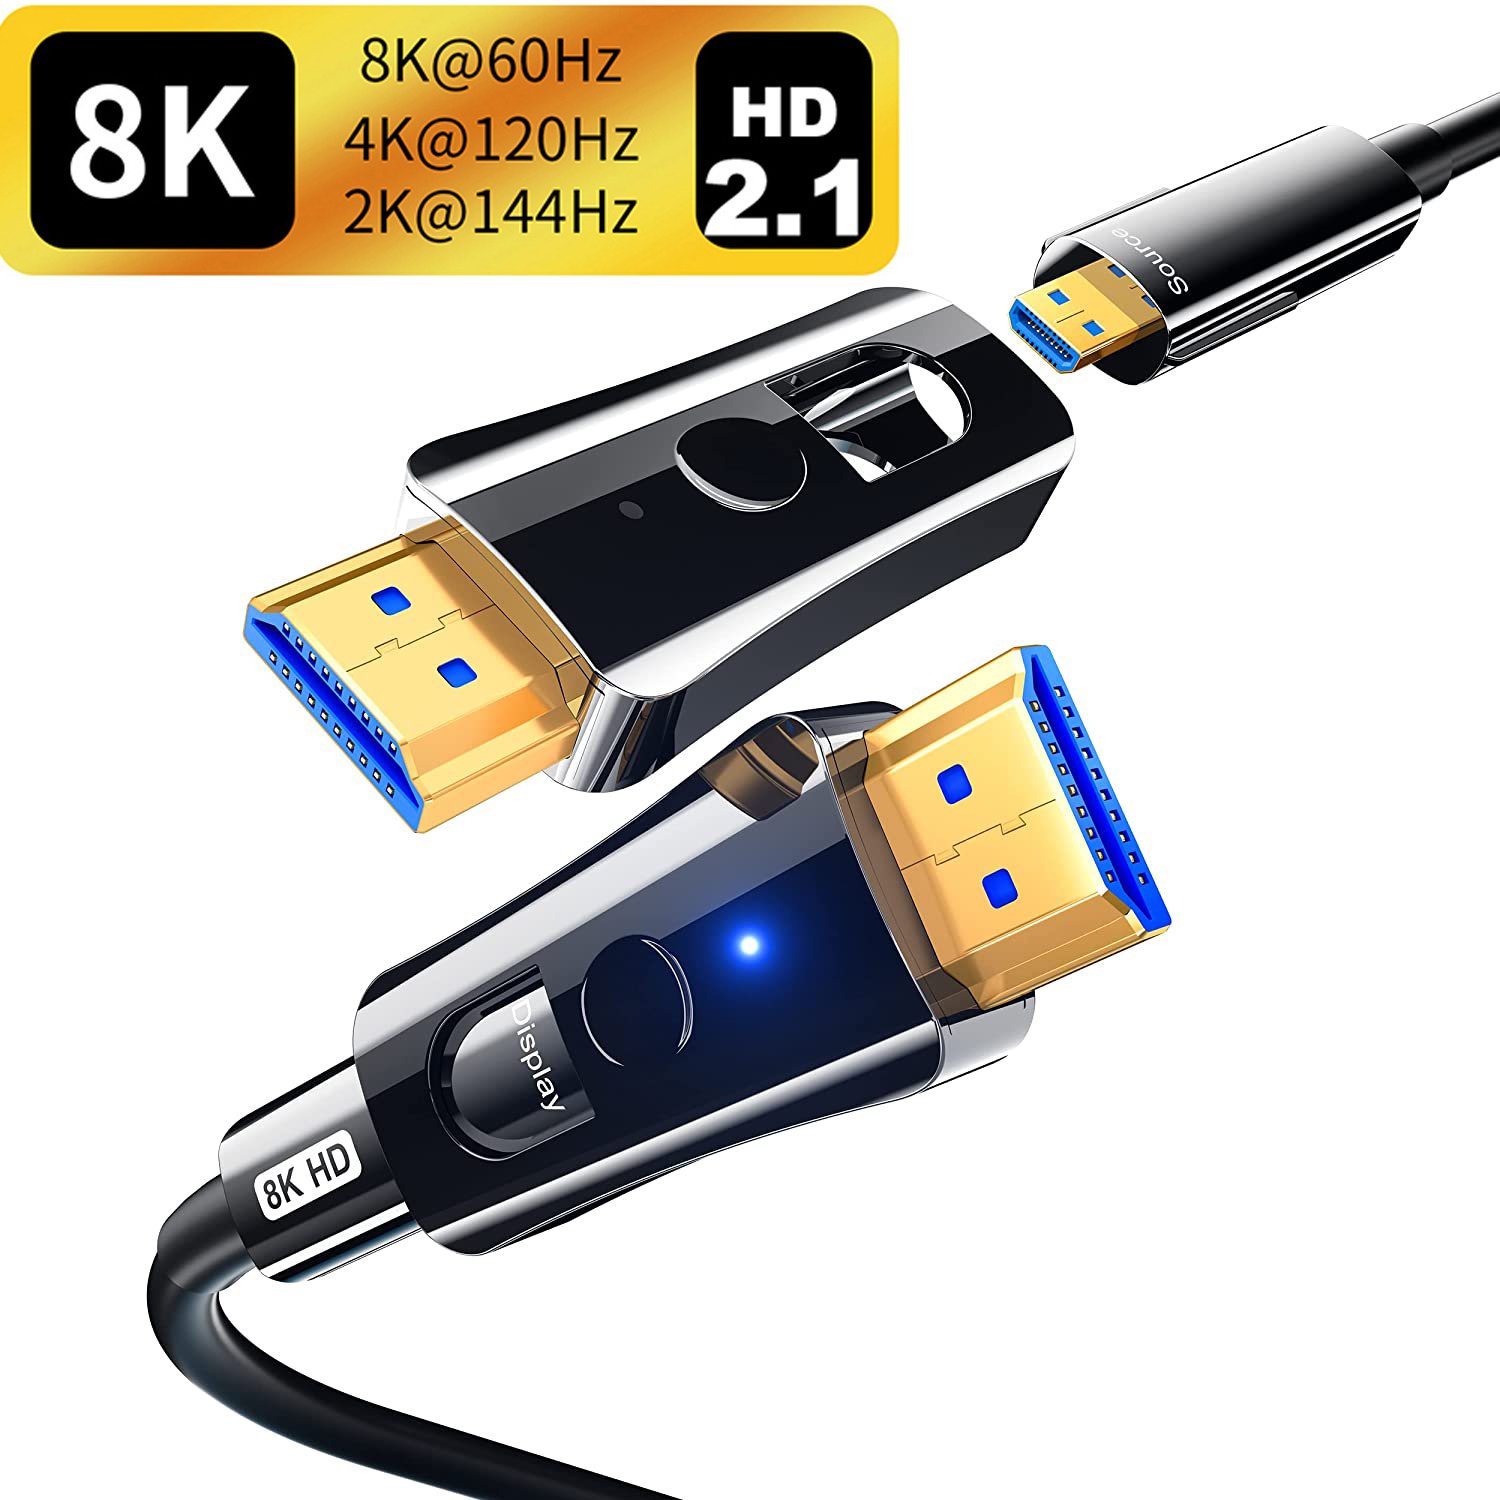  8K Detachable HDMI Fiber Optic Cable 33Feet/10m, Long